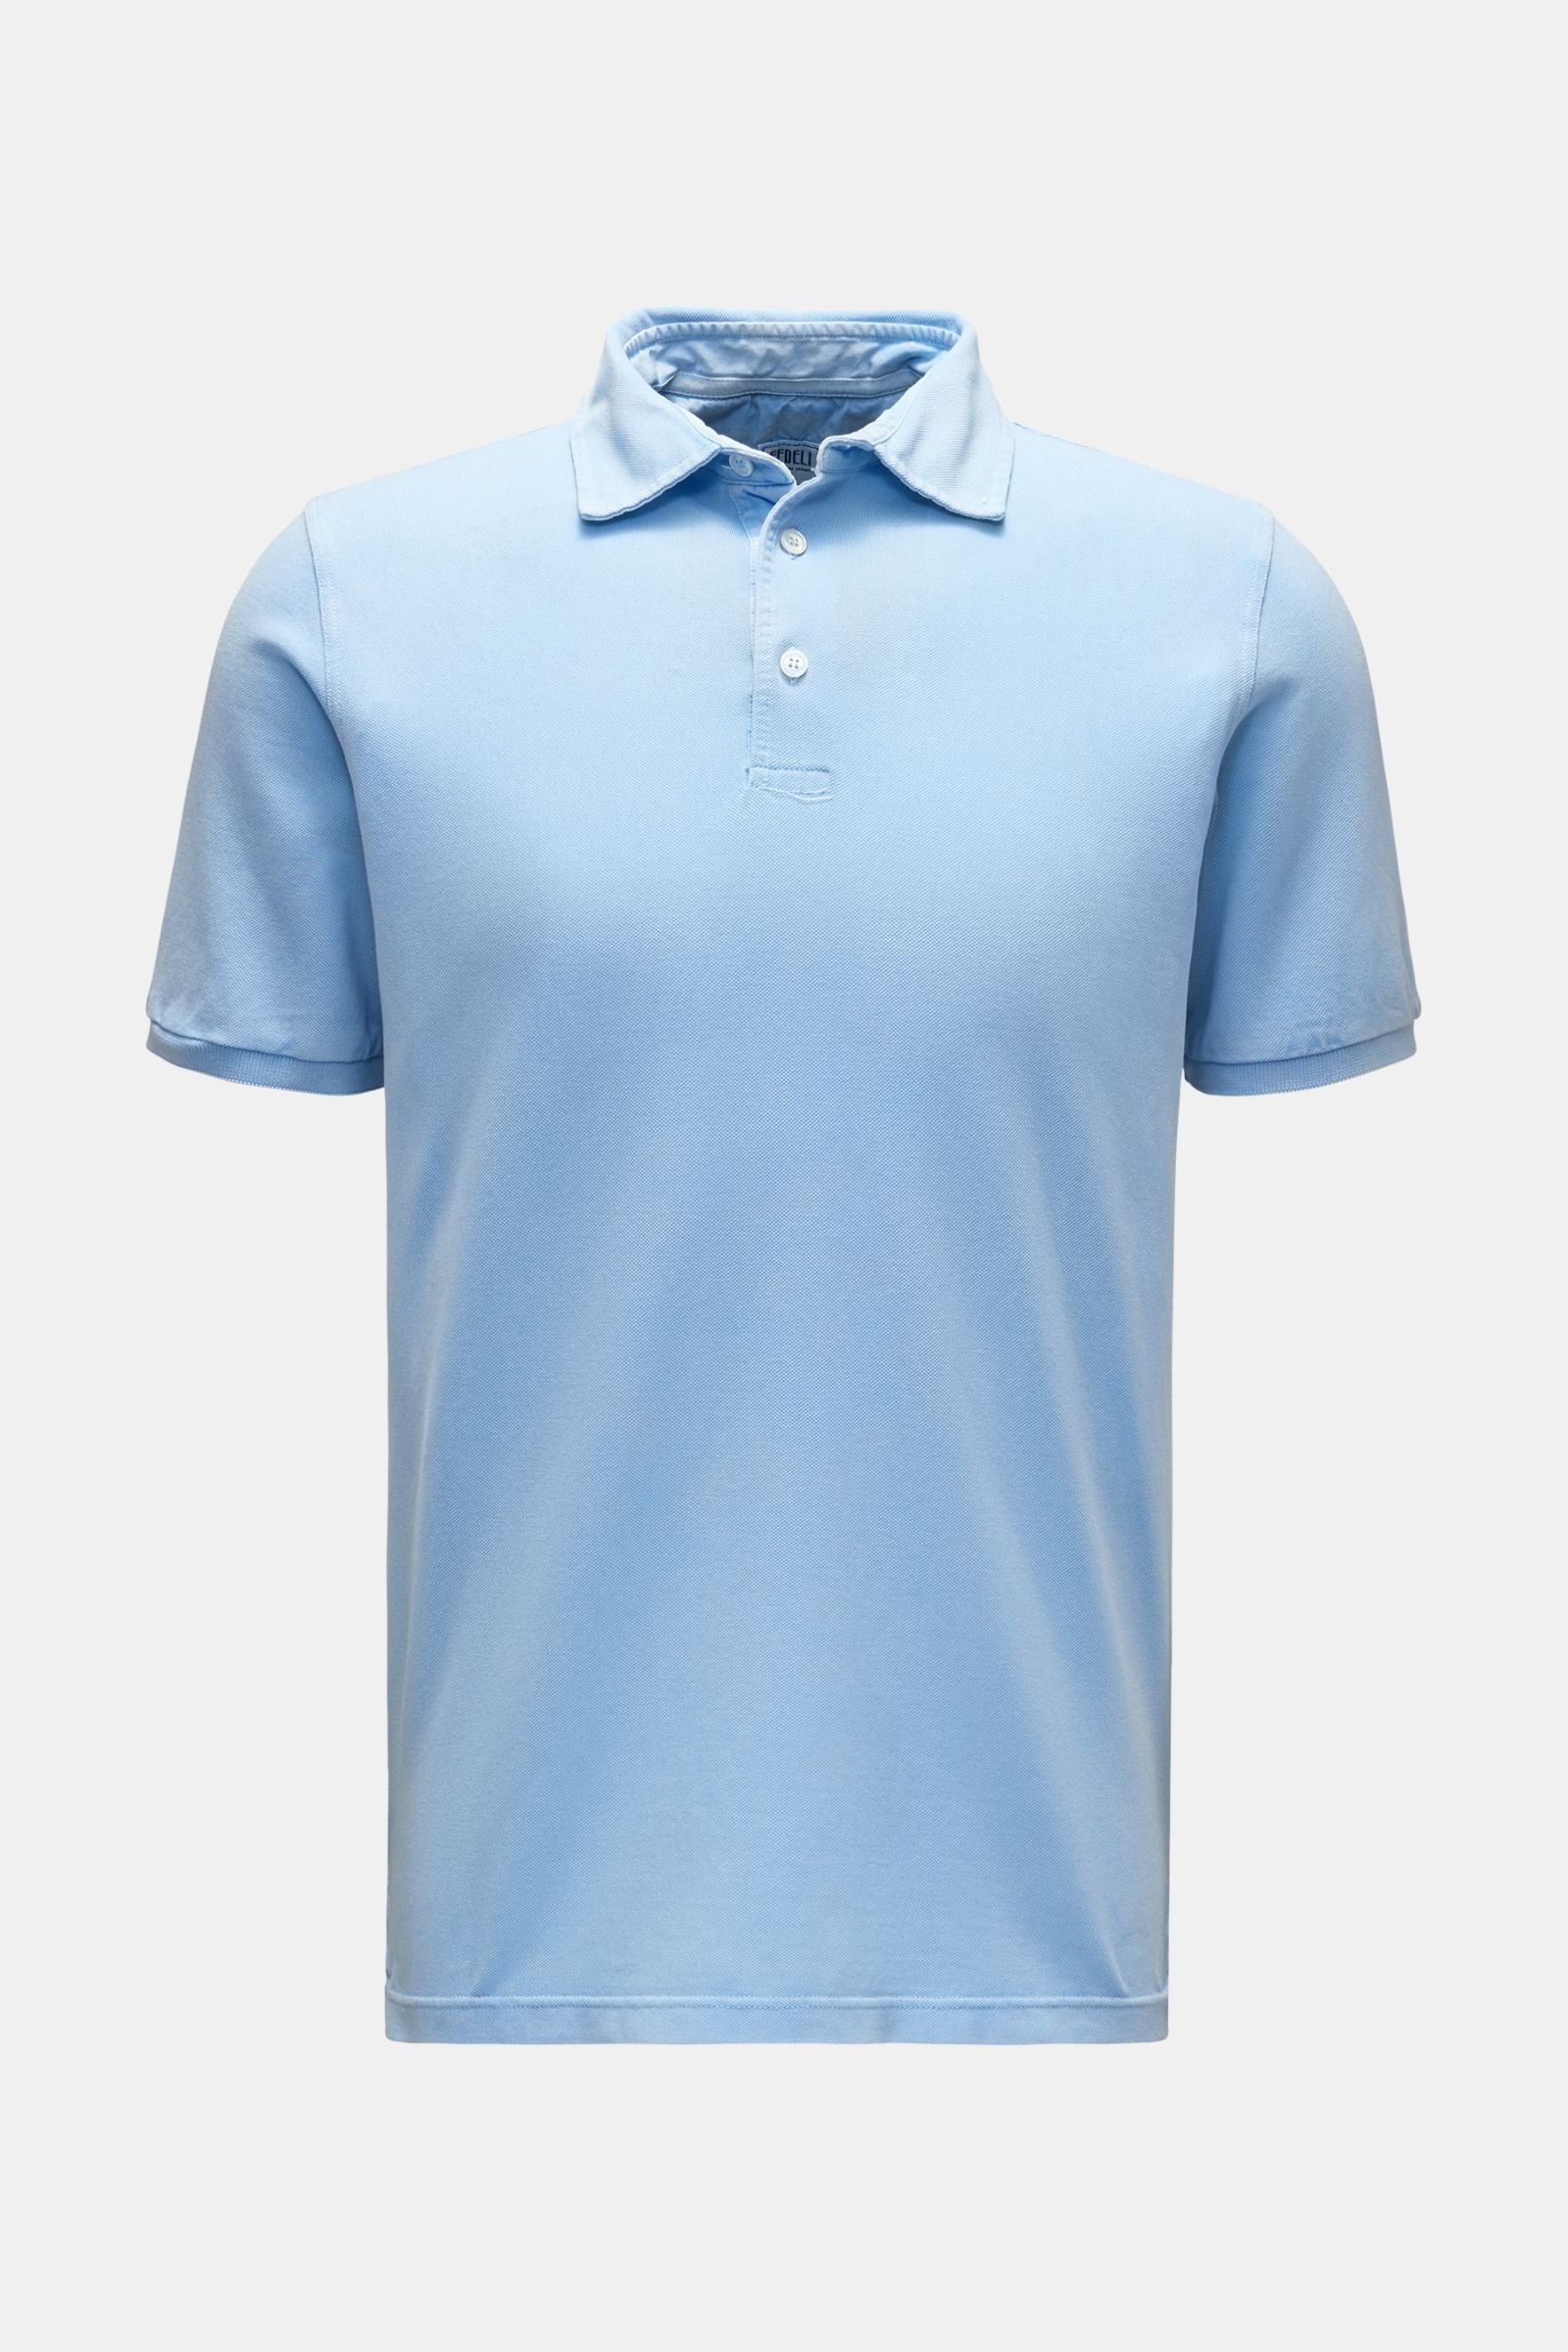 Fedeli Fedeli Polo Shirt - Lichtblauw